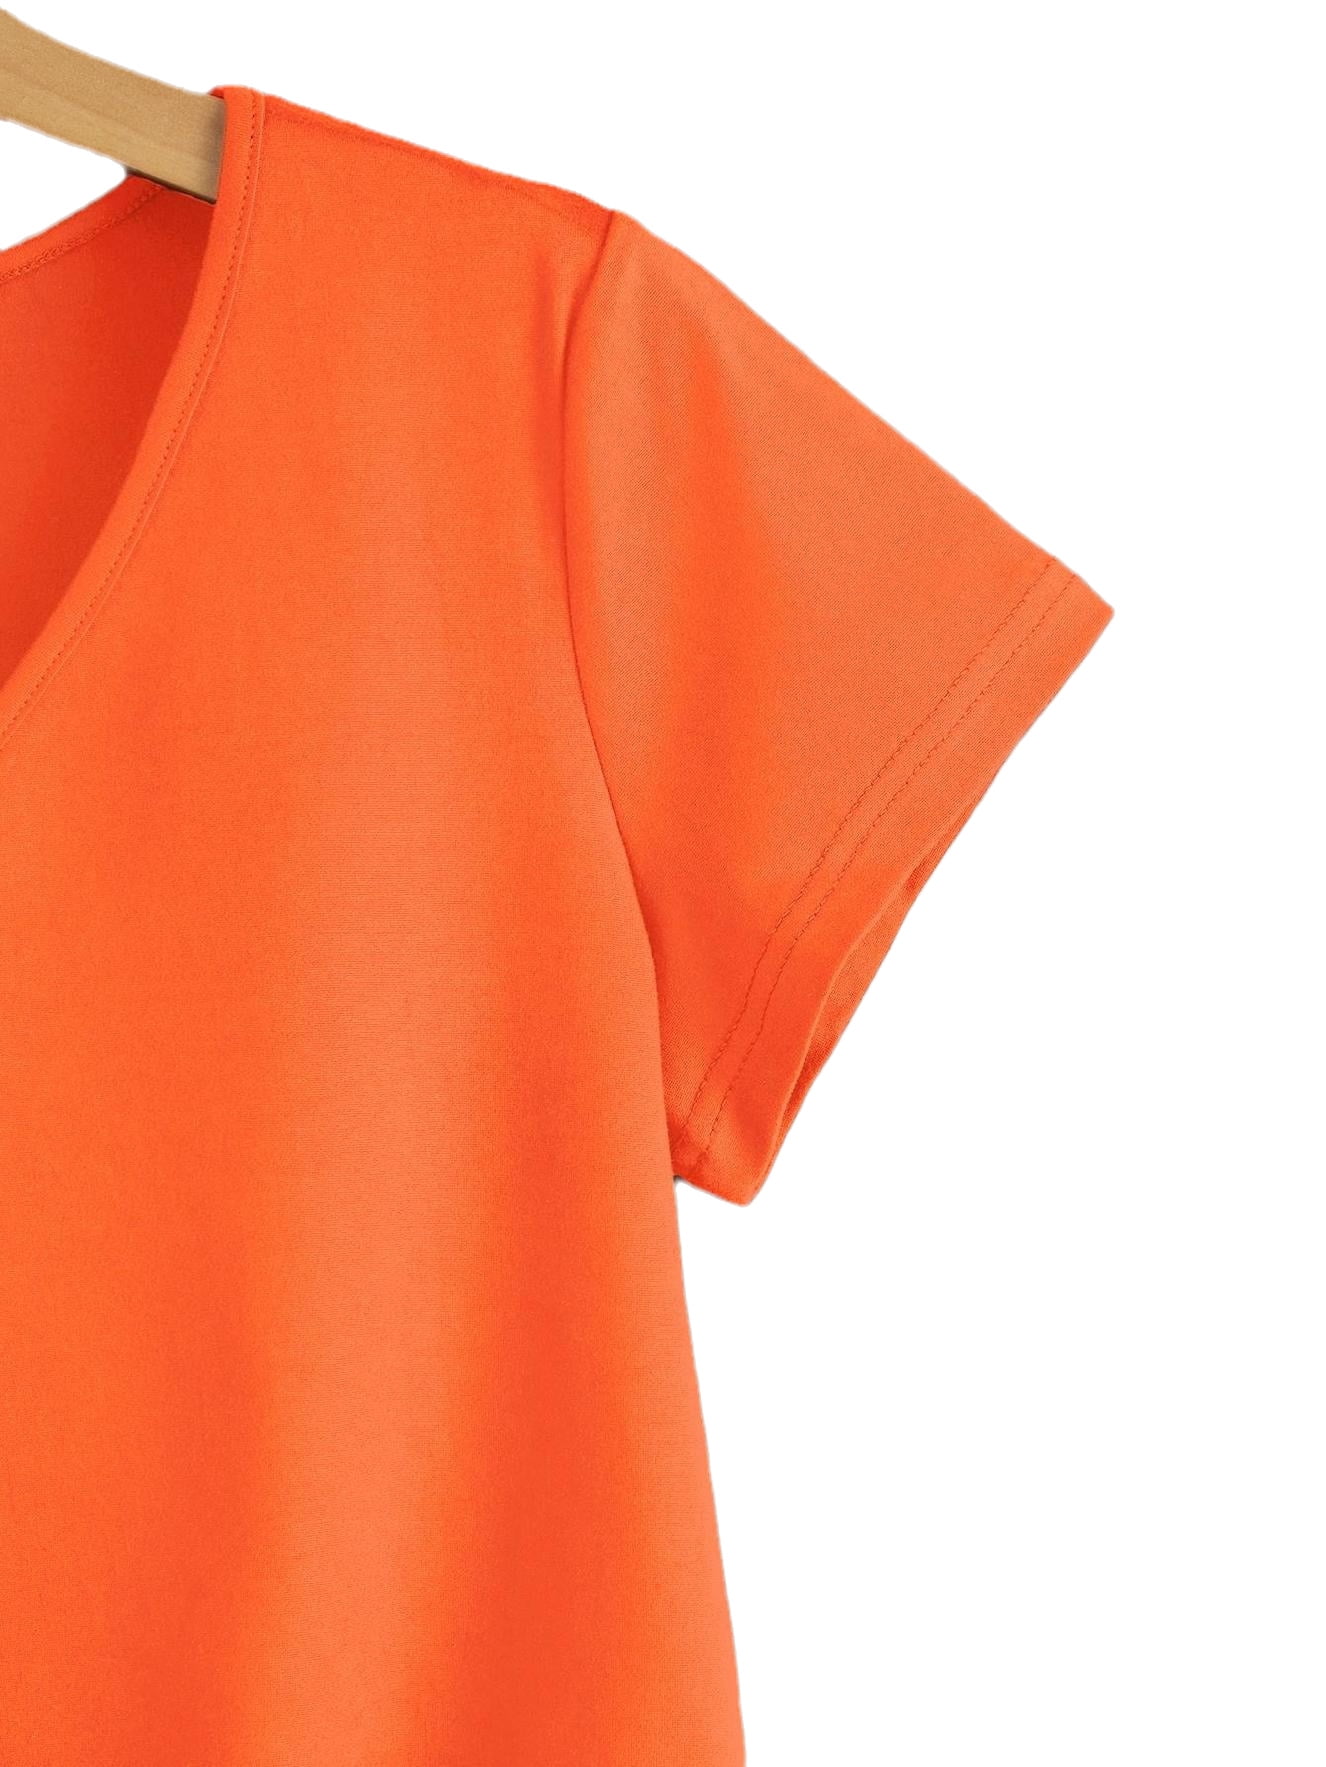 Chicos* Orange Print Size X Large Ladies Casual Shirts